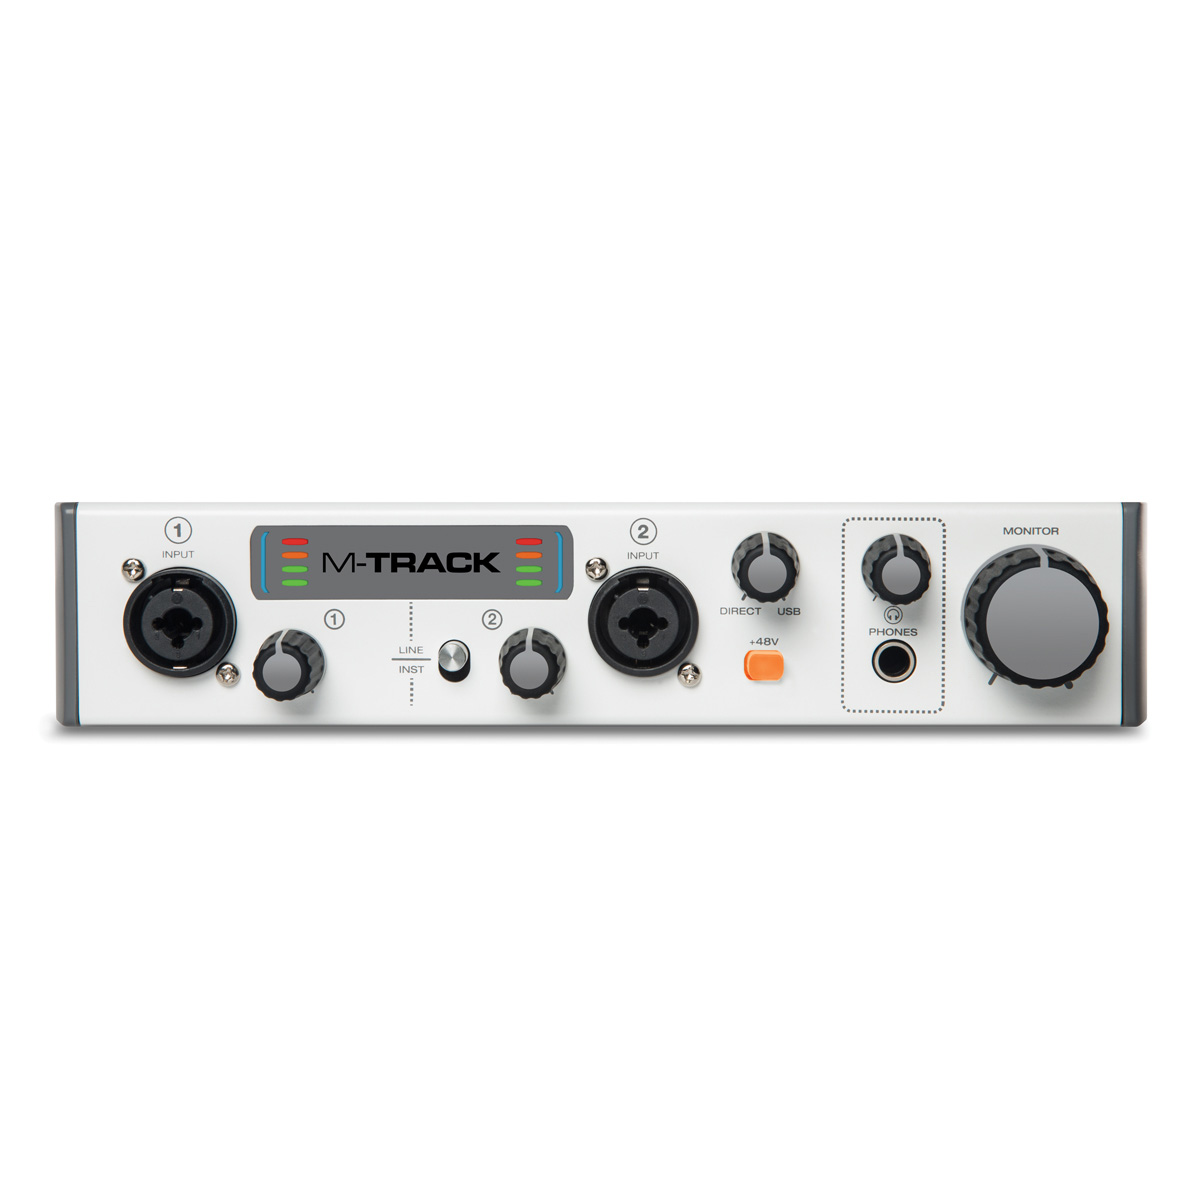 M-Audio M-Track II 24-bit/48kHz 2-채널 USB 2.0 오디오 인터페이스 [벌크제품]